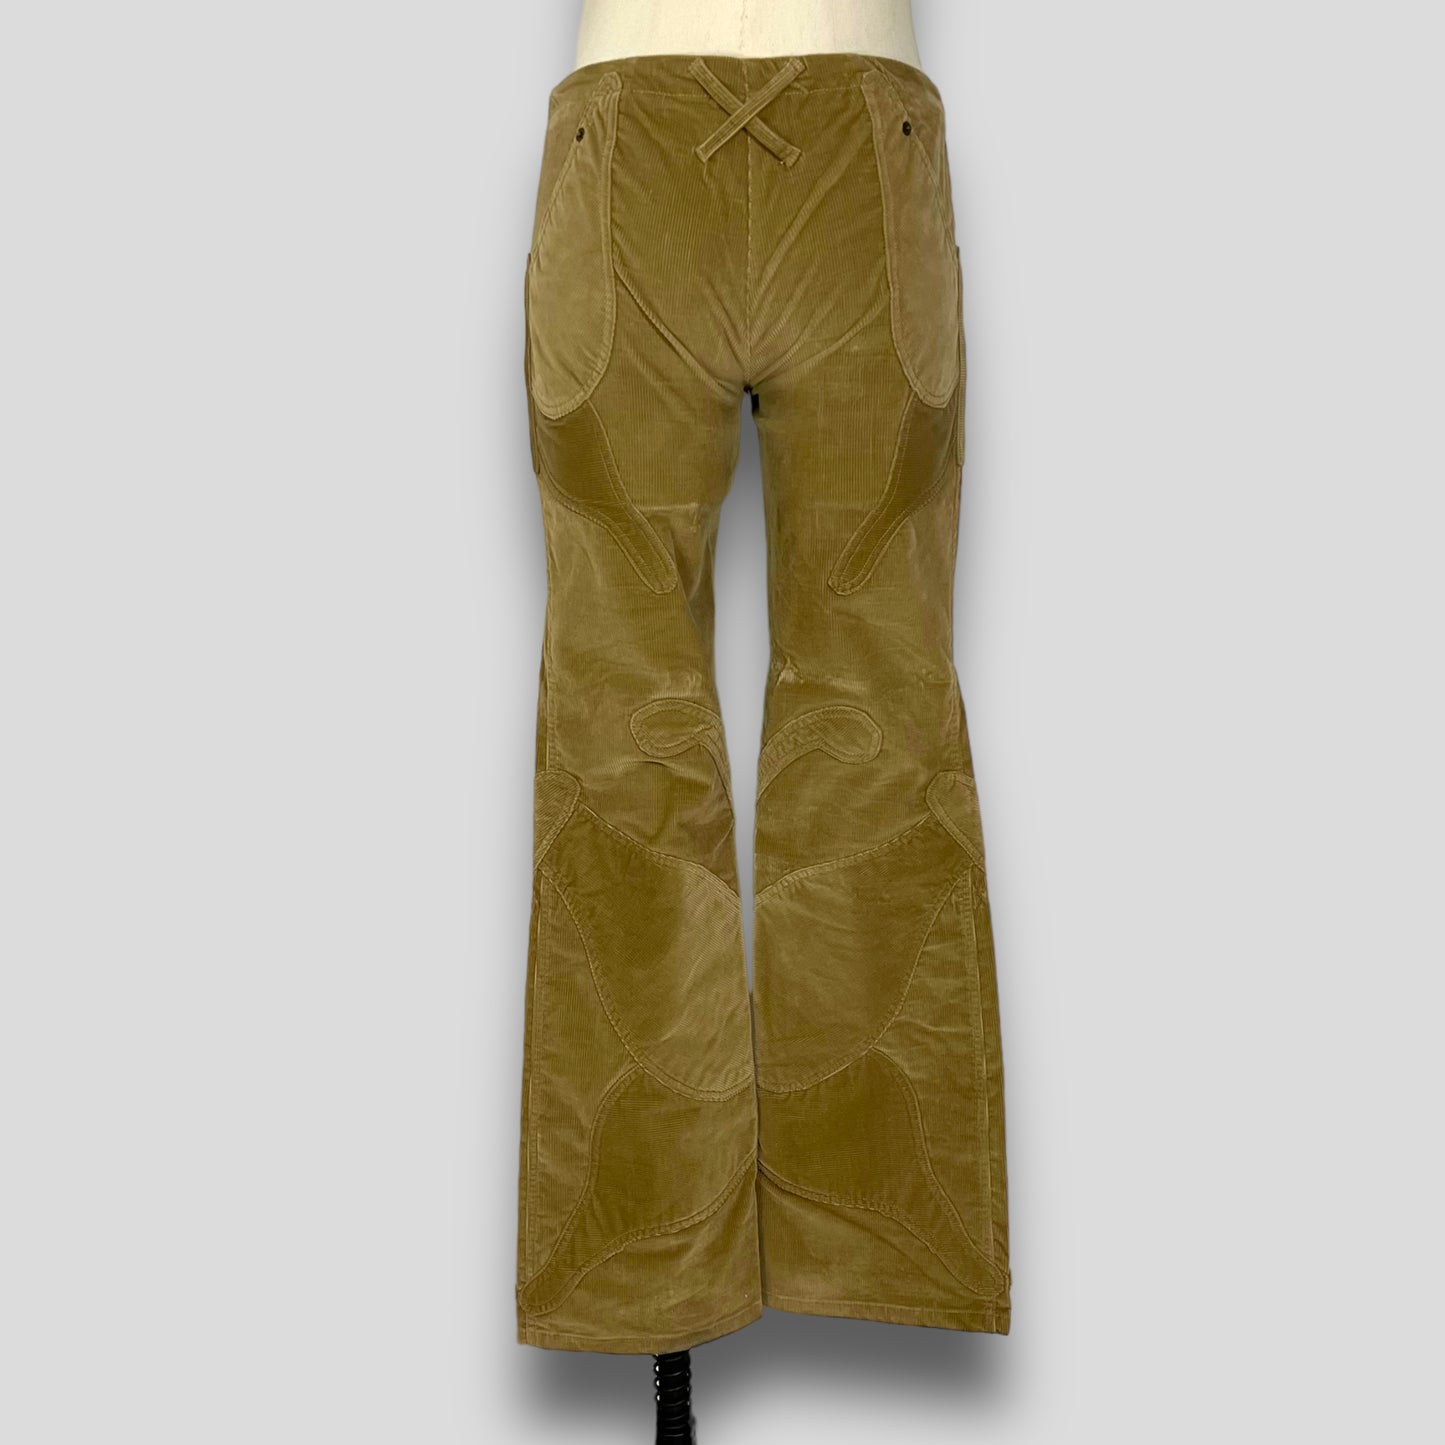 Dolce & Gabbana c. 2002 butterfly pants